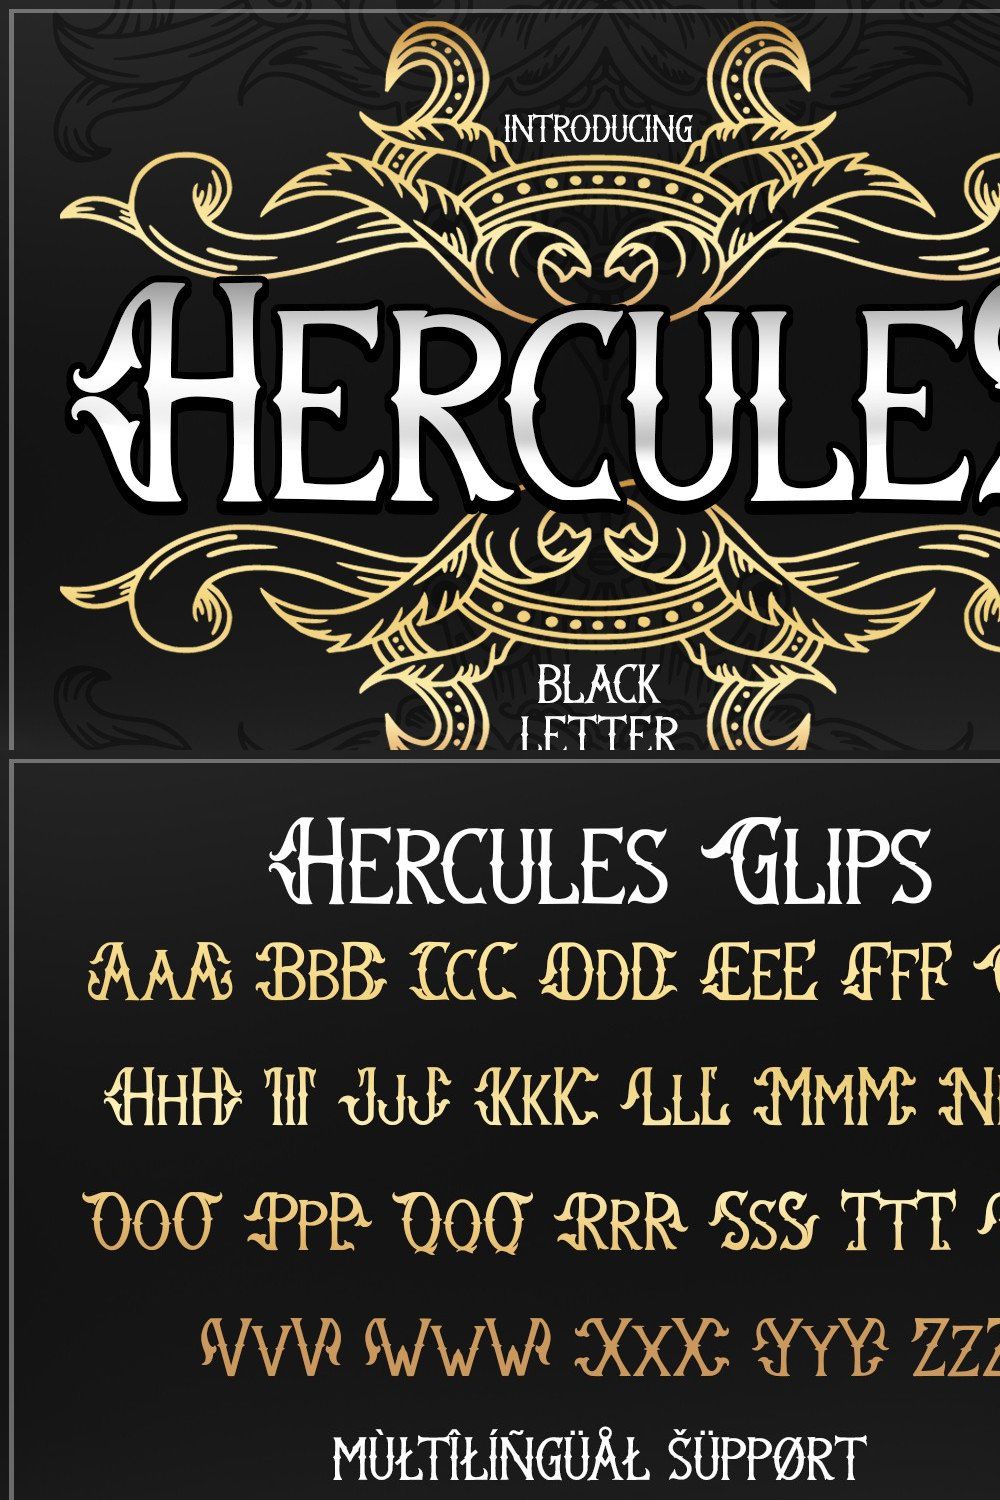 Hercules Black Letter pinterest preview image.